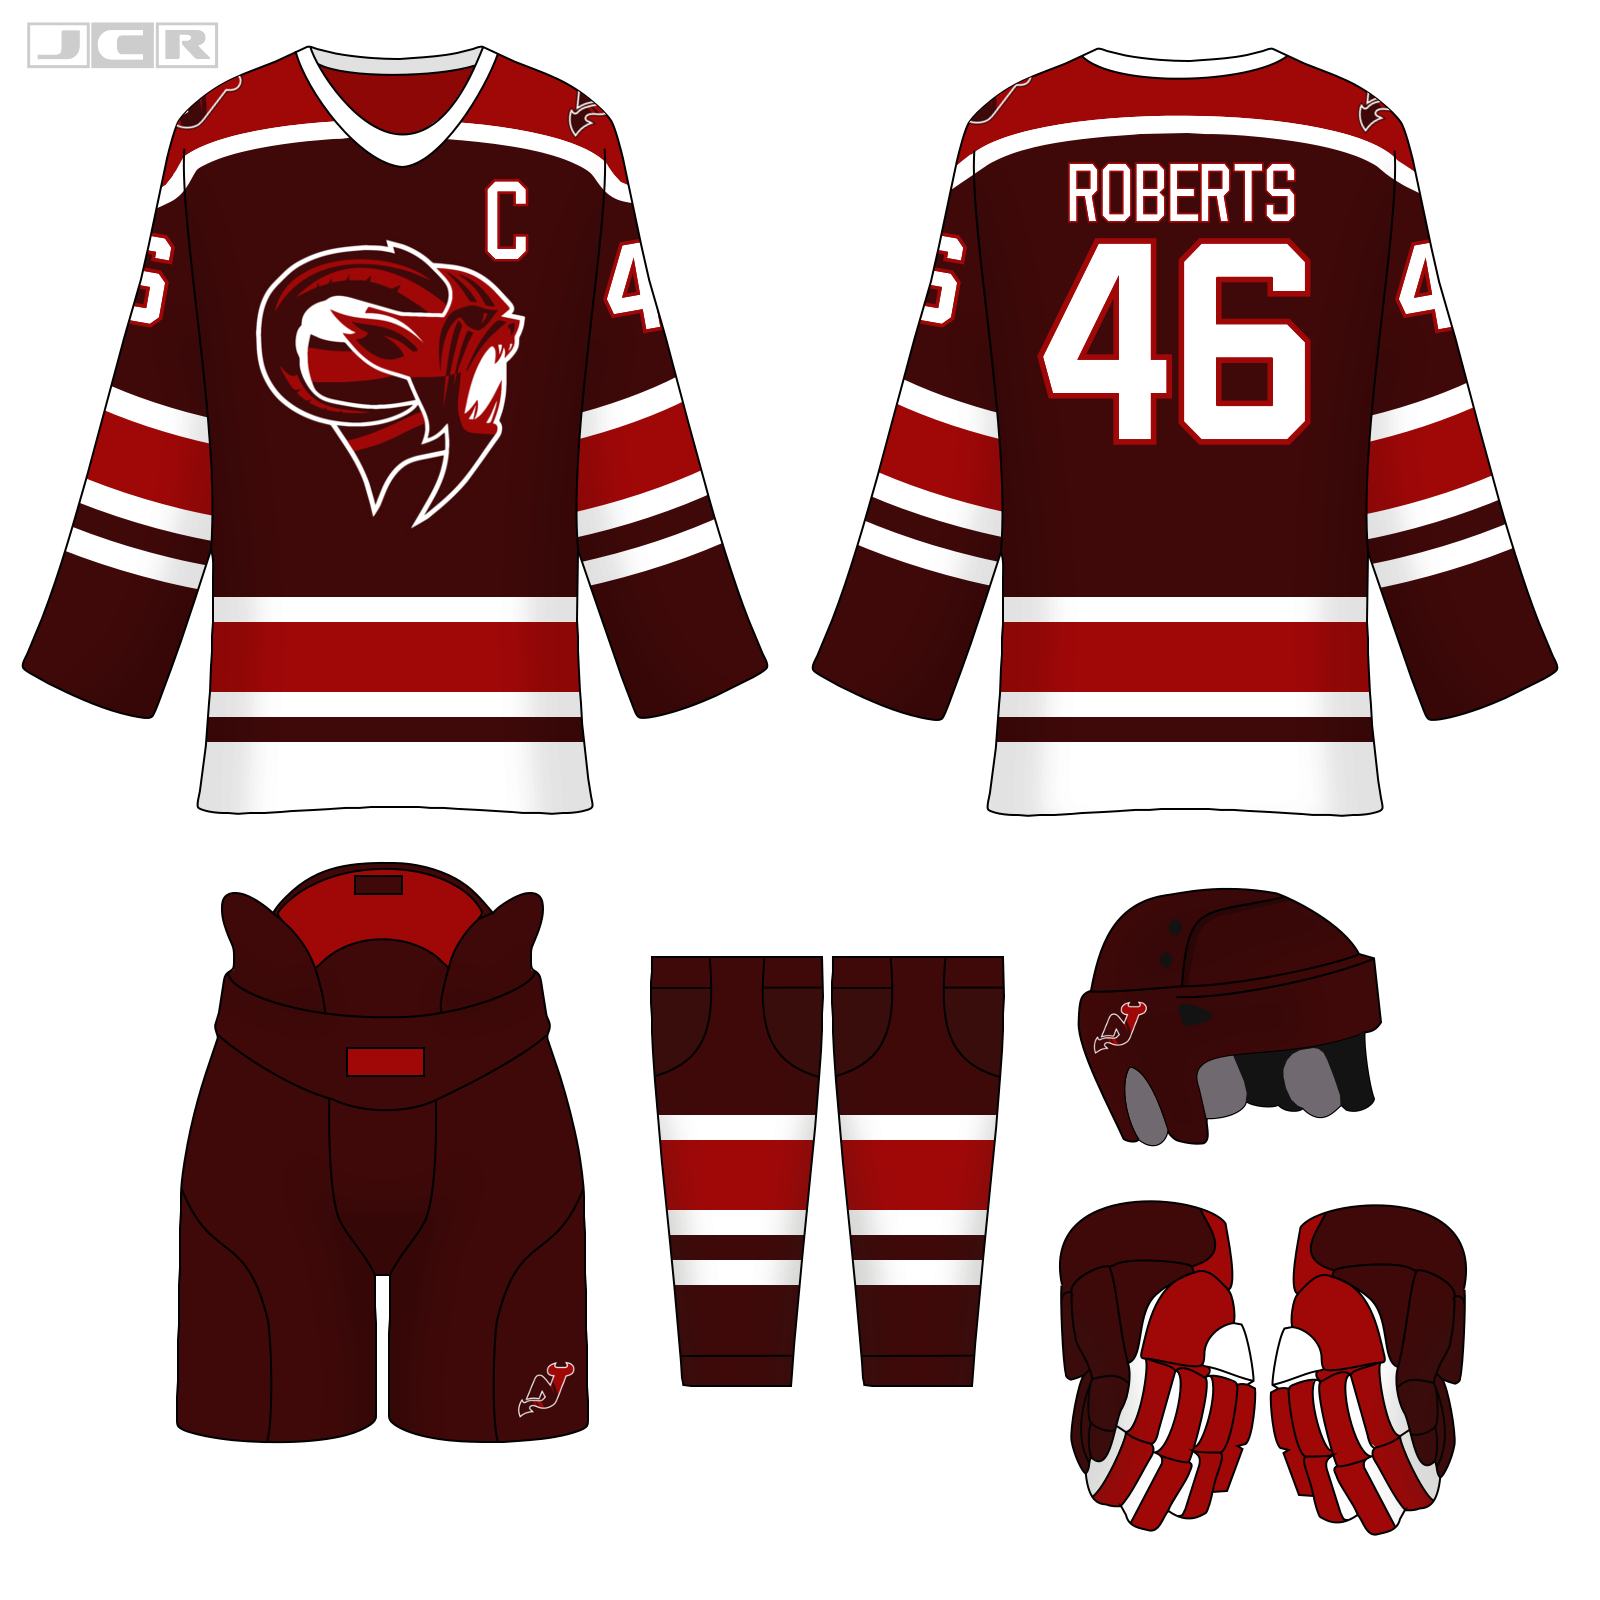 New Jersey Devils Remix - Concepts - Chris Creamer's Sports Logos Community  - CCSLC - SportsLogos.Net Forums